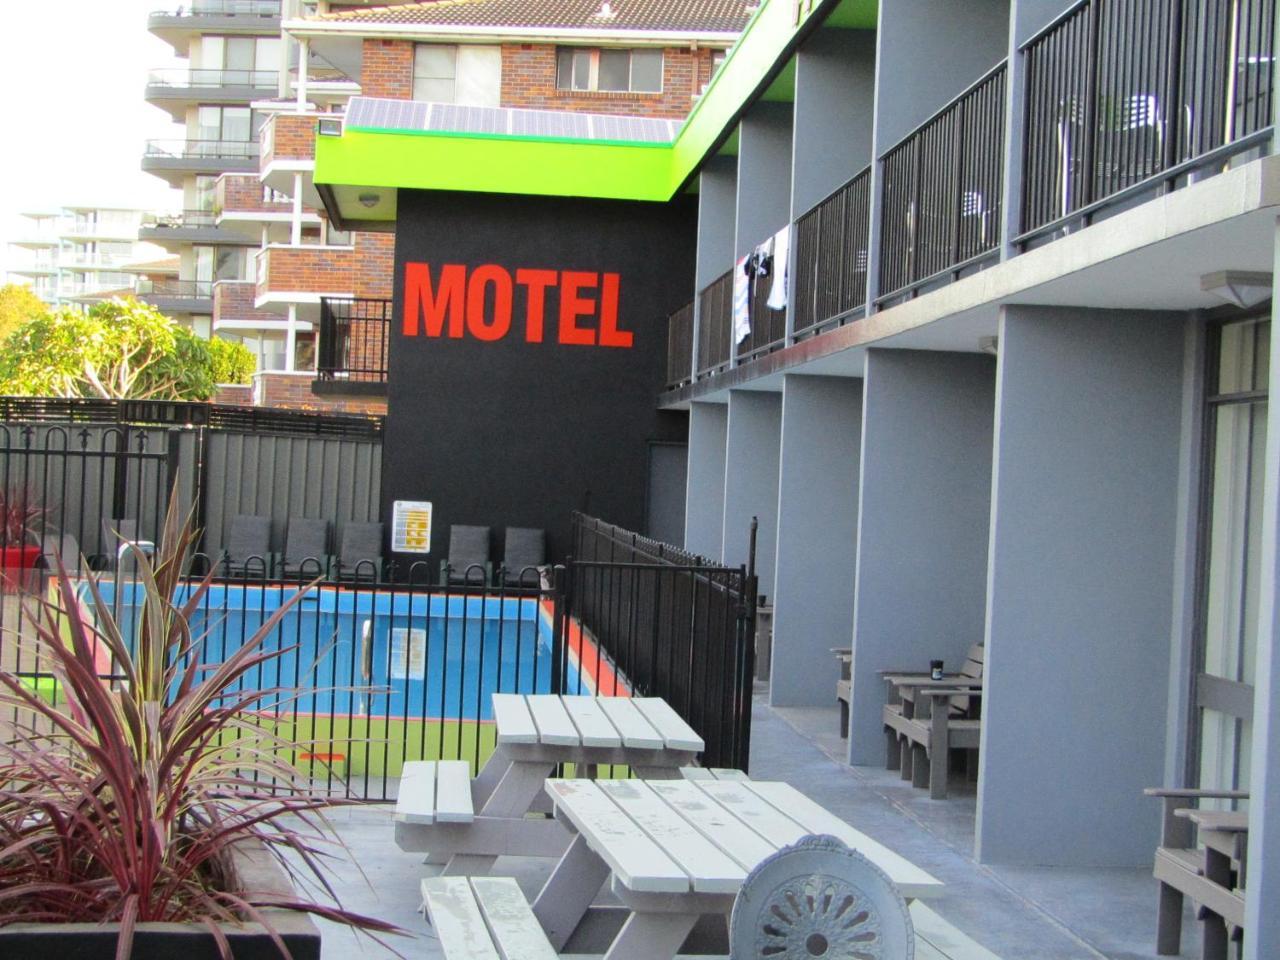 Le George Motel Port Macquarie Exterior photo